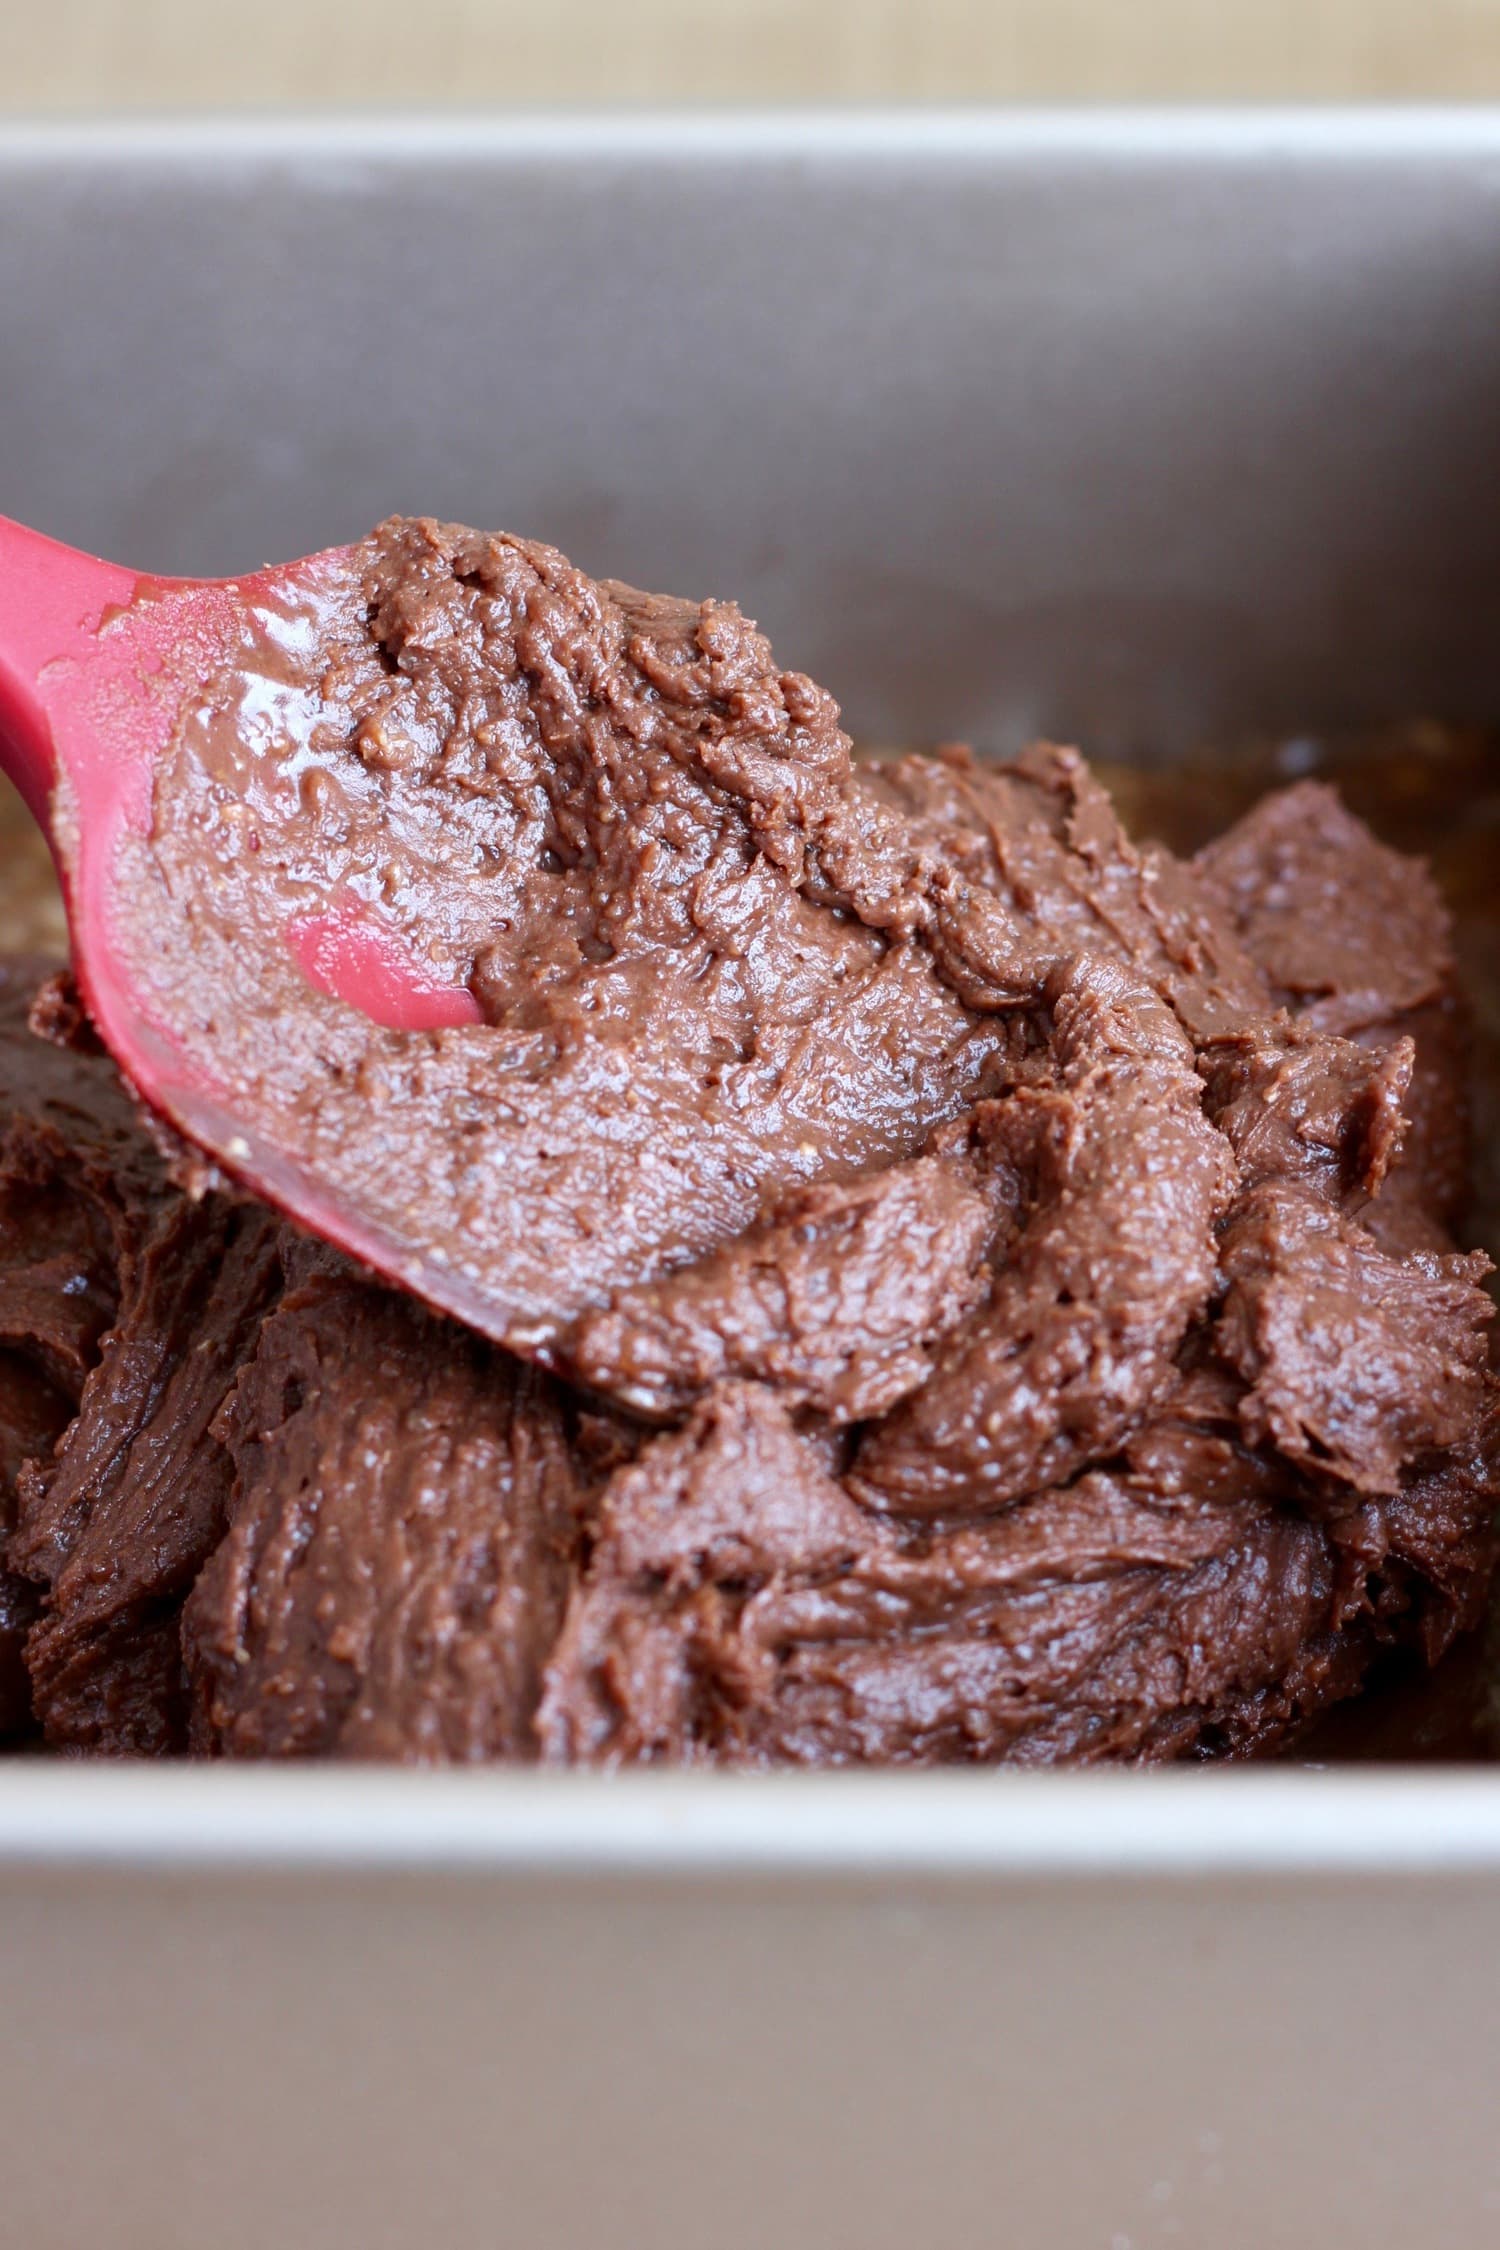 Chocolate Brownie Batter being spread in pan